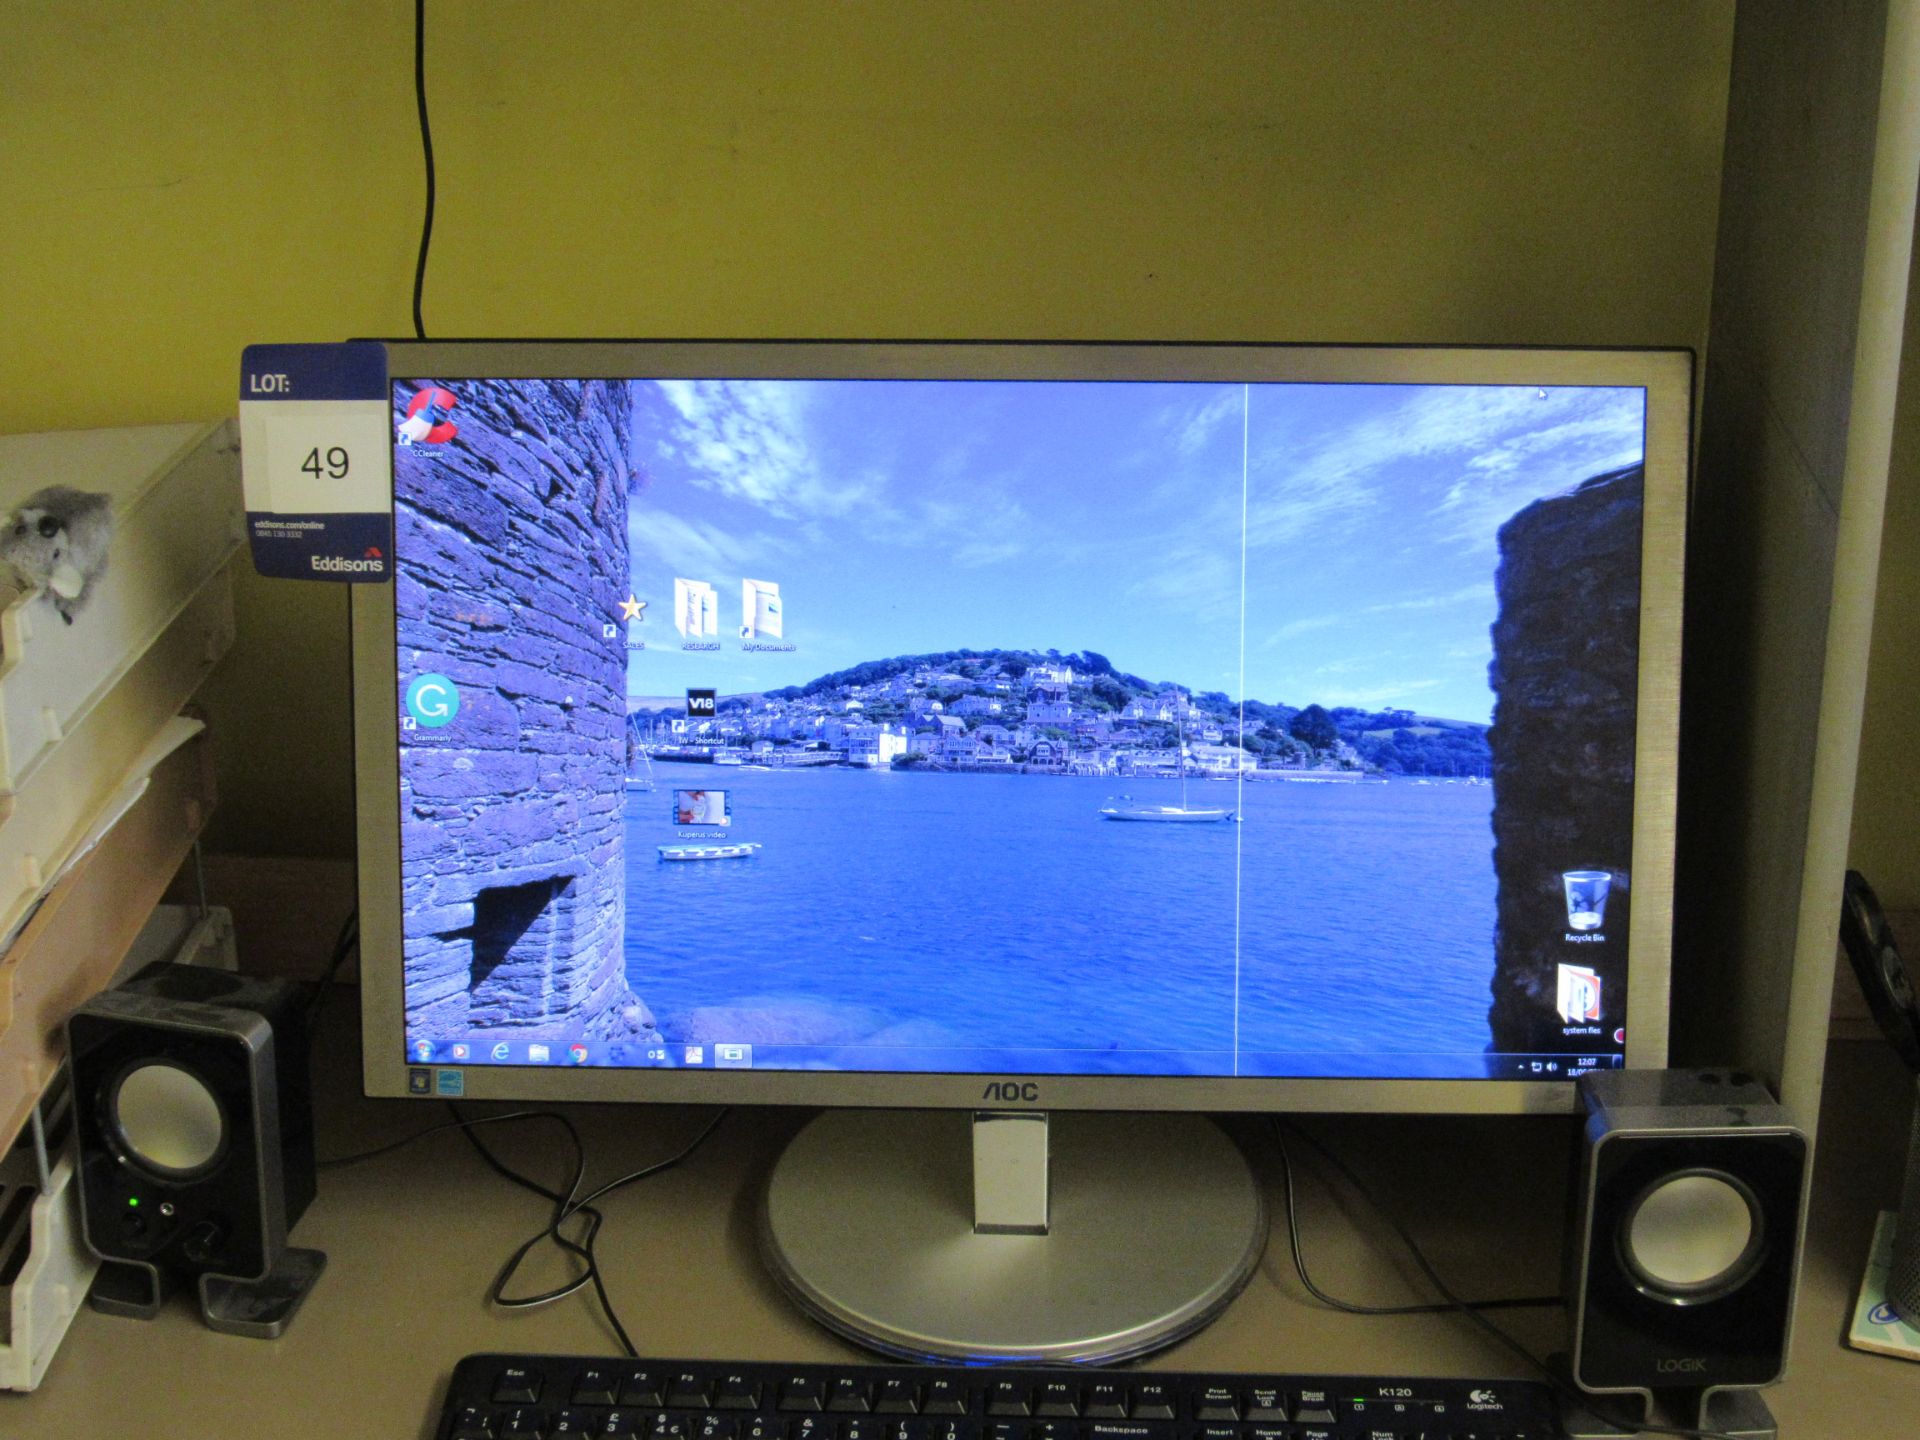 AOC i2353fh 230LM0016 Digital Monitor with 2 Logik Speakers and HP Laserjet 1015 Printer - Image 2 of 2